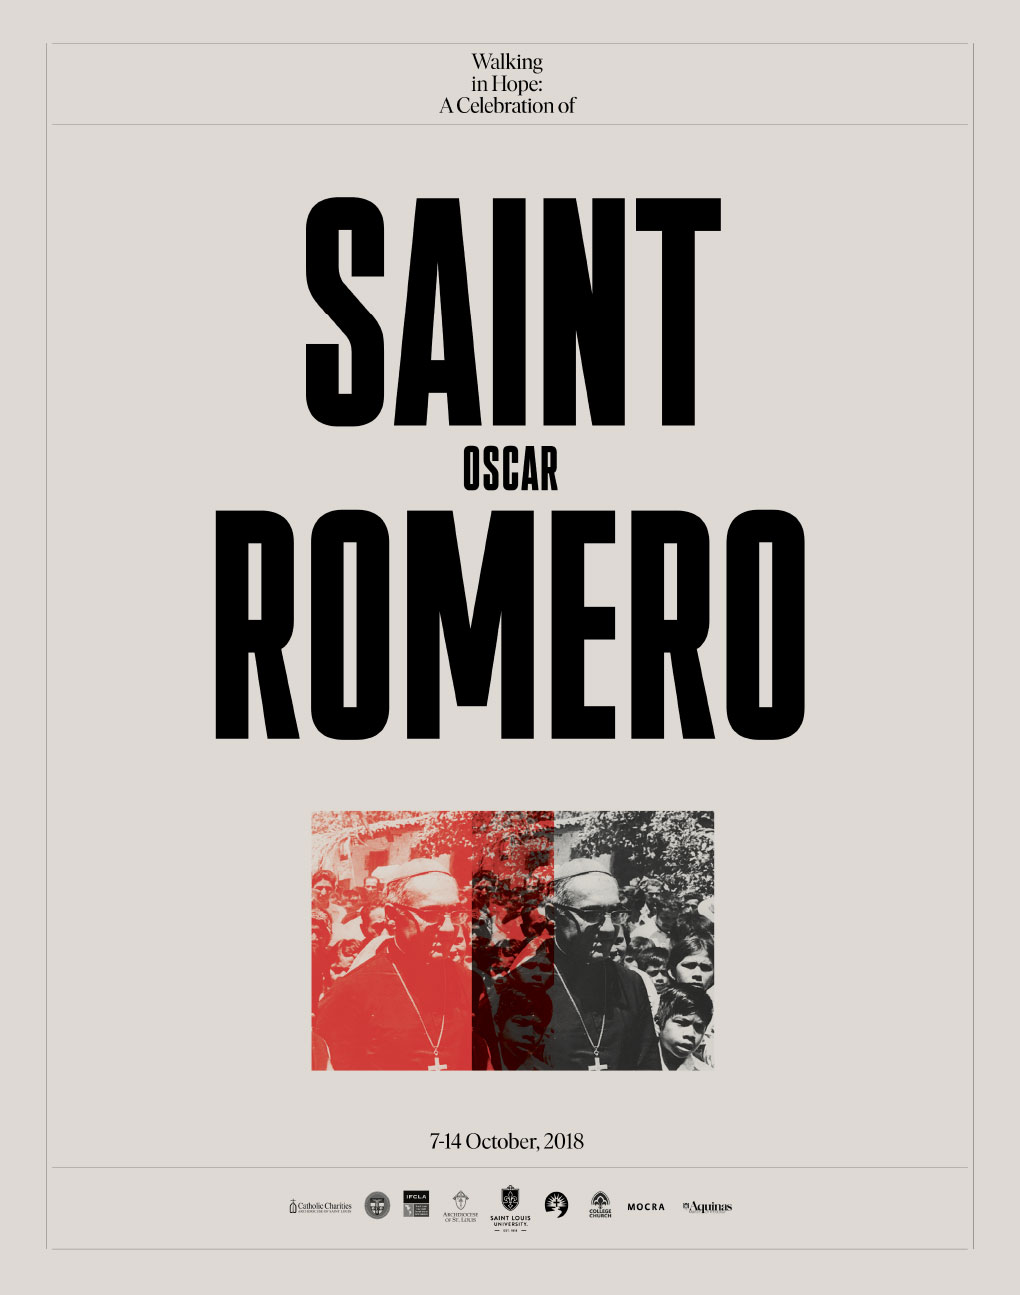 Saint Oscar Romero poster